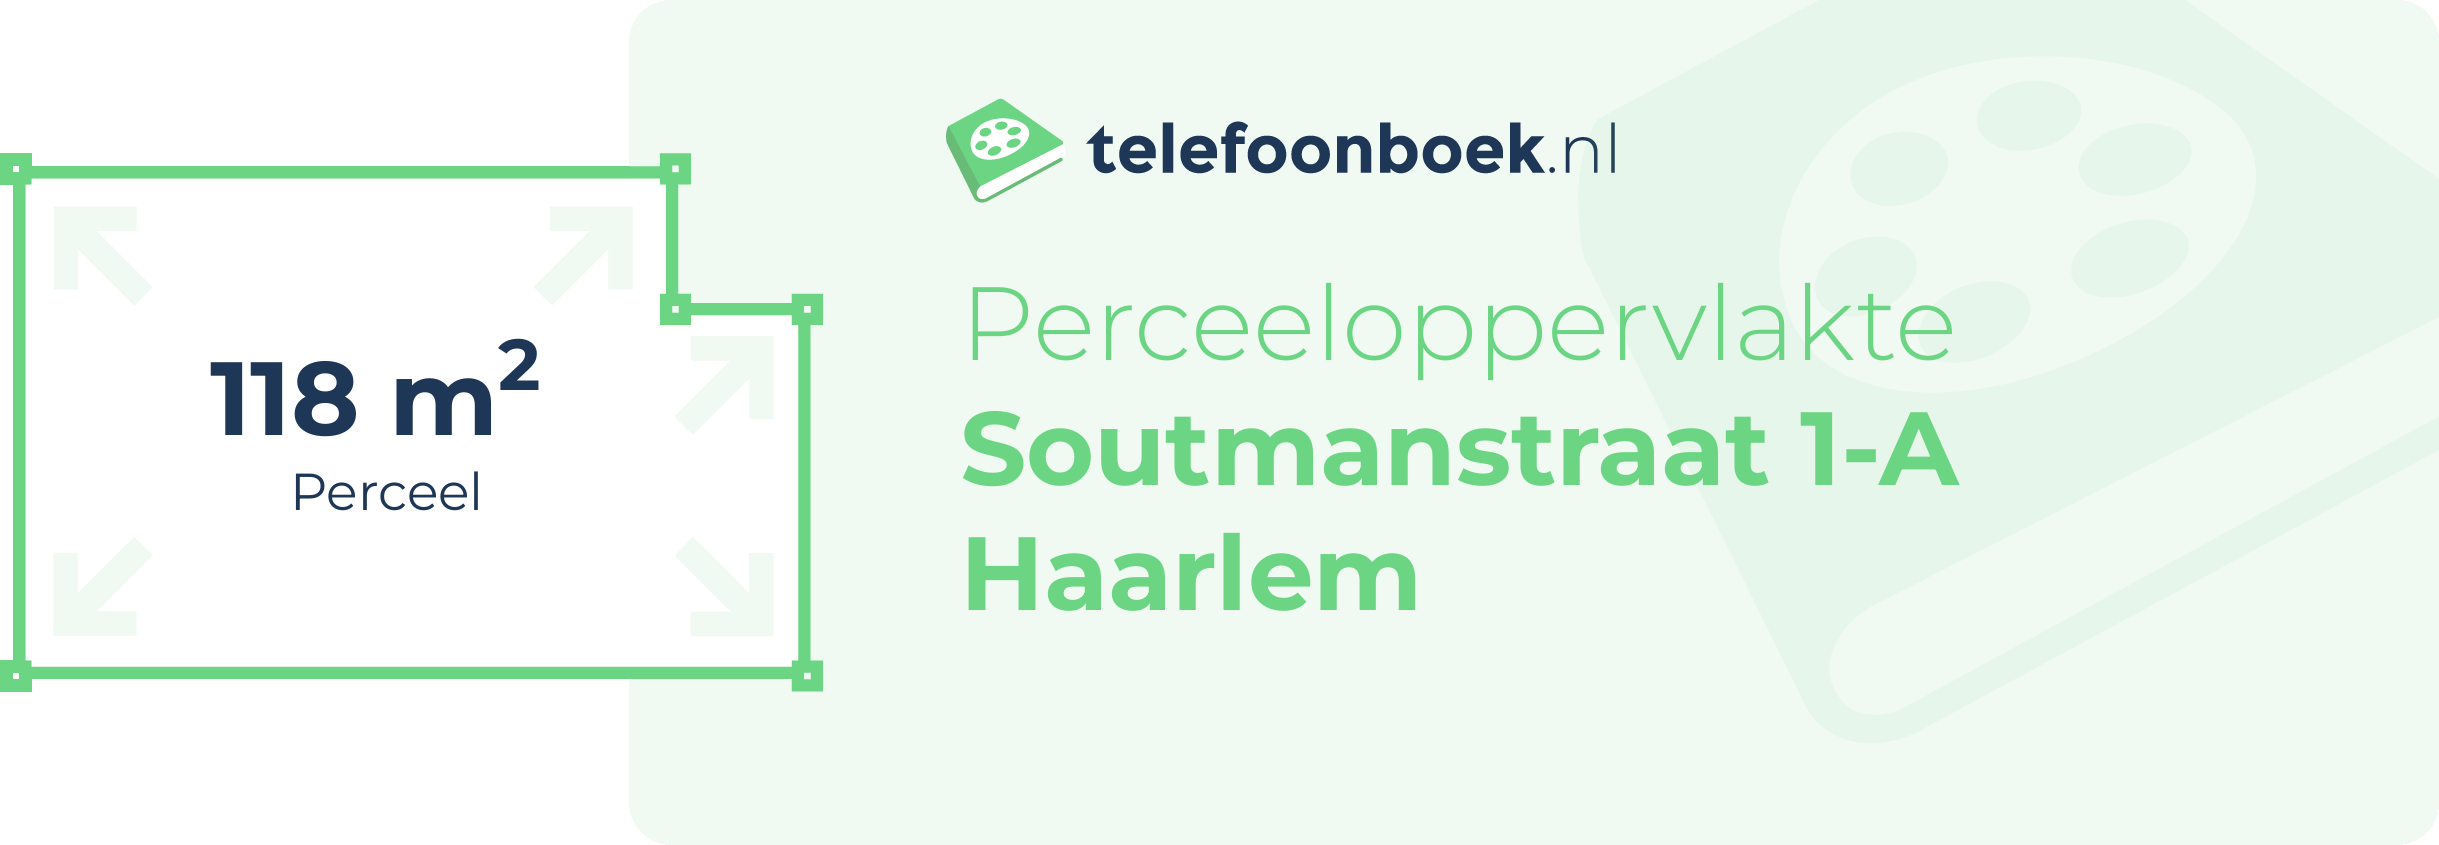 Perceeloppervlakte Soutmanstraat 1-A Haarlem